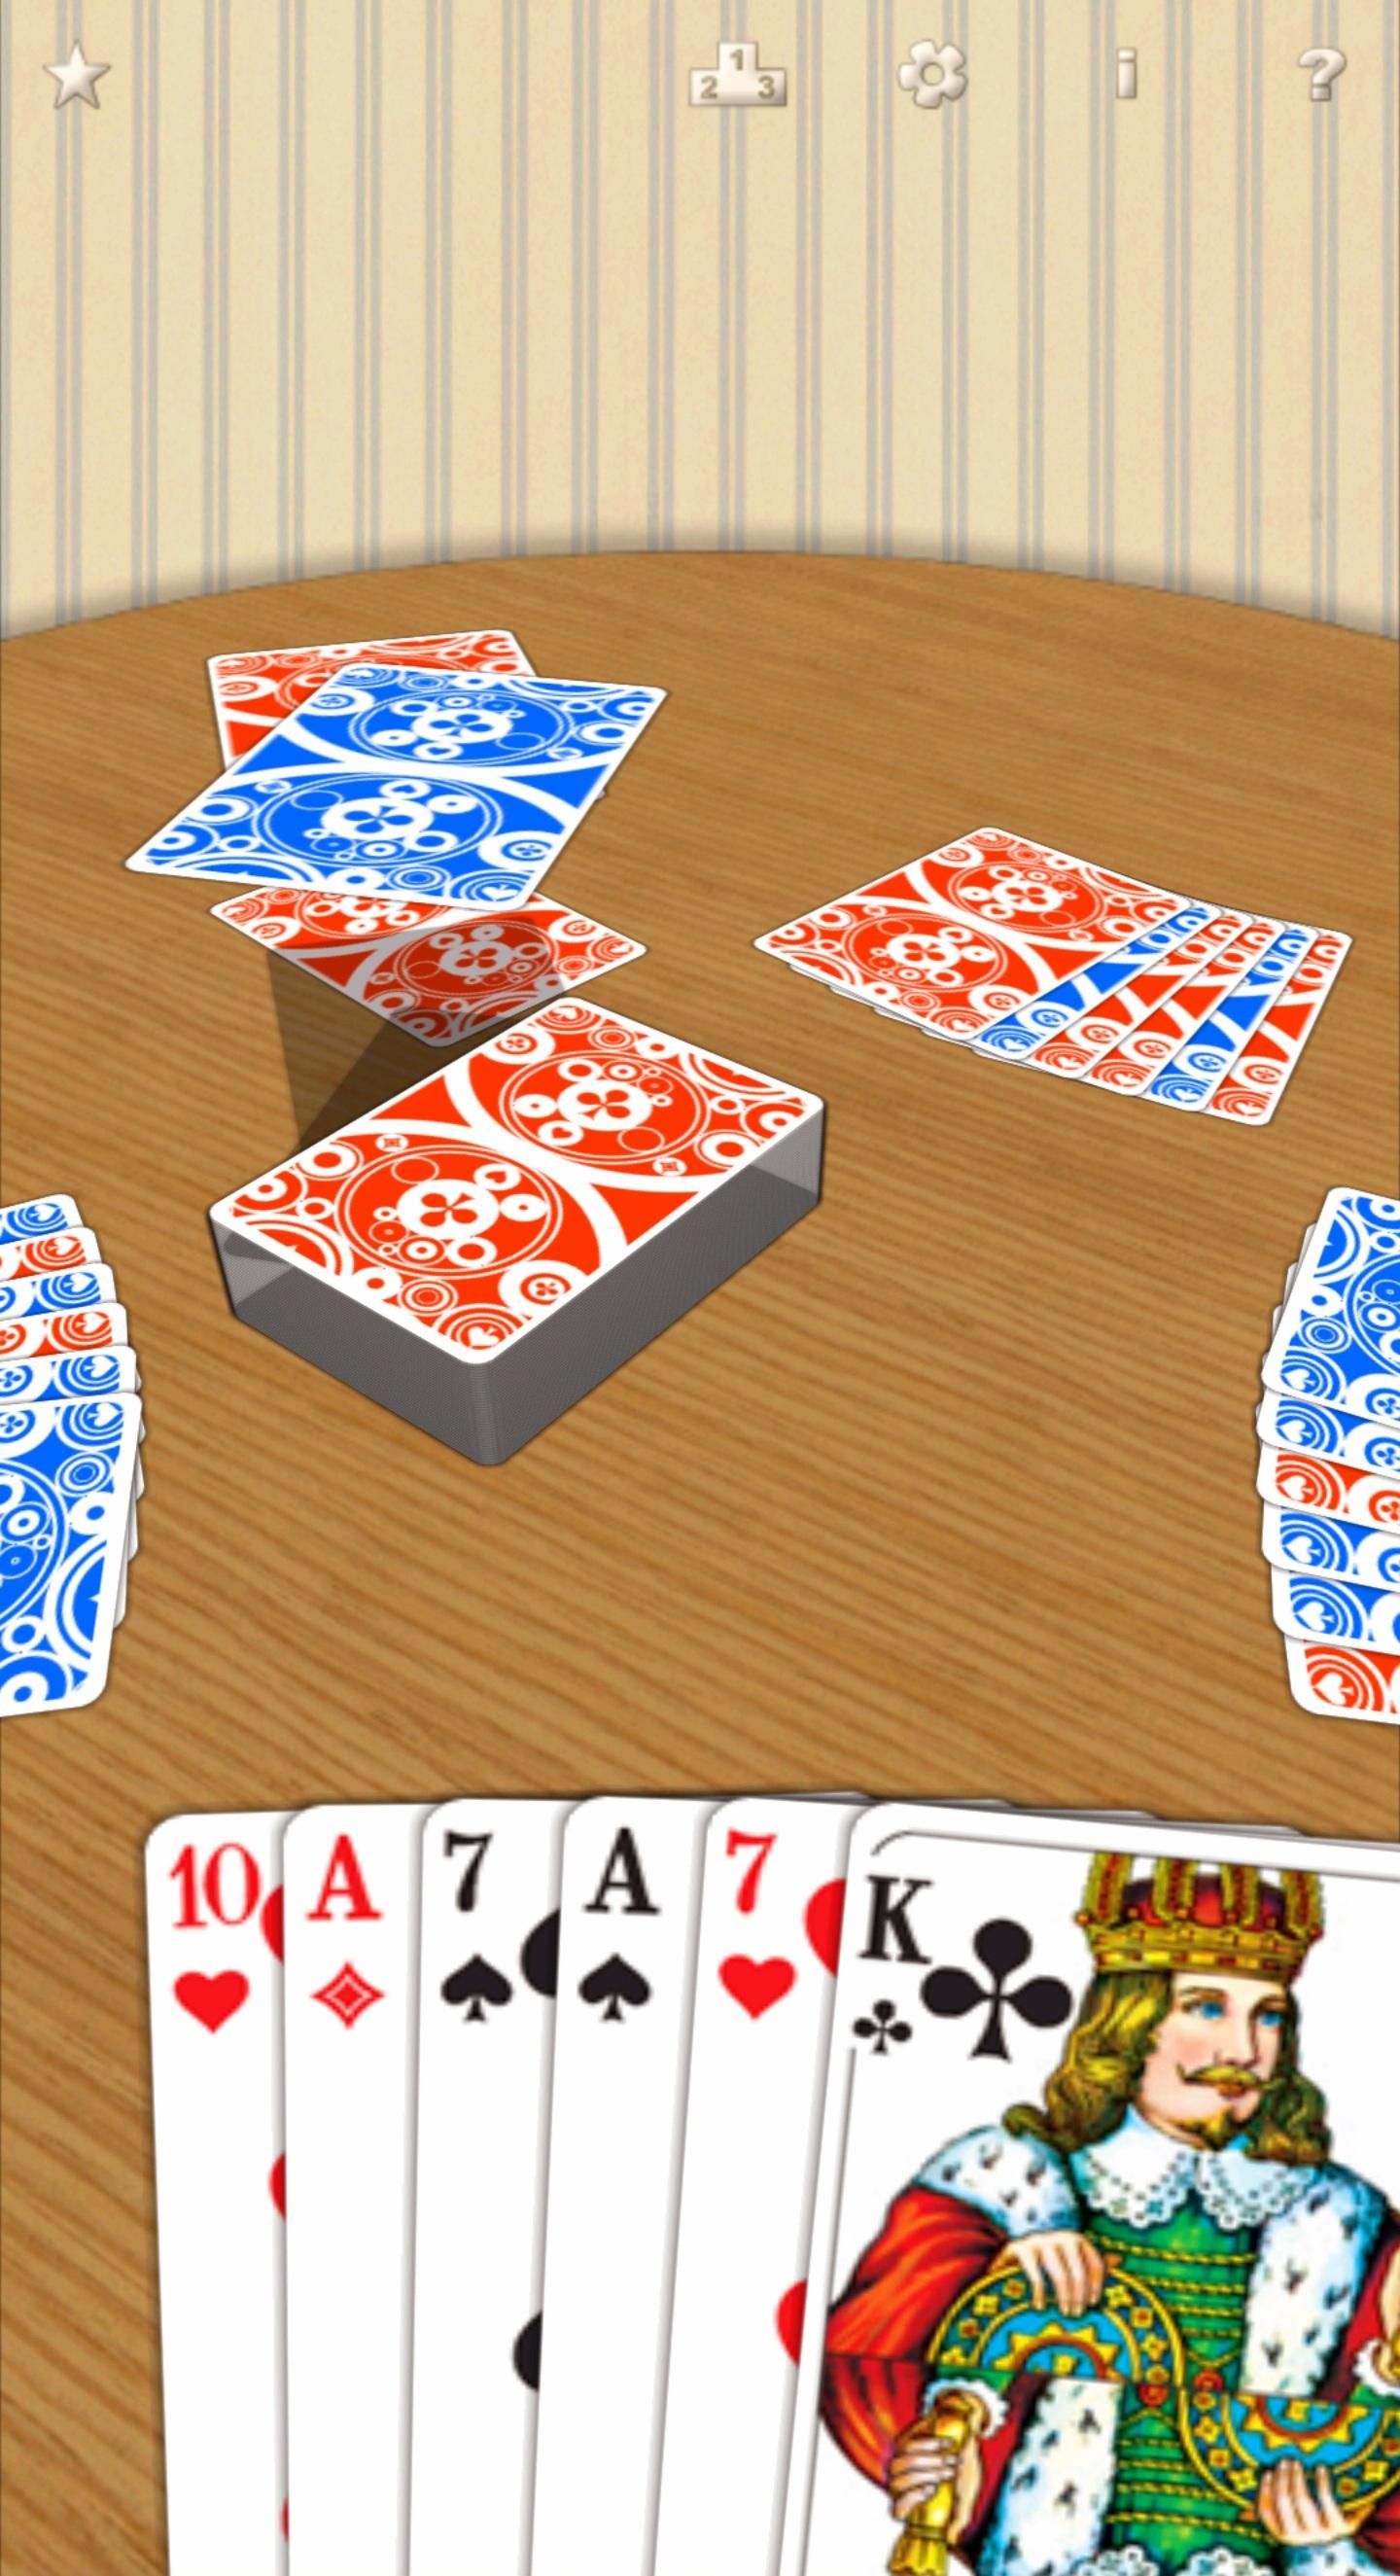 Crazy Eights free card game 1.6.96 Screenshot 23